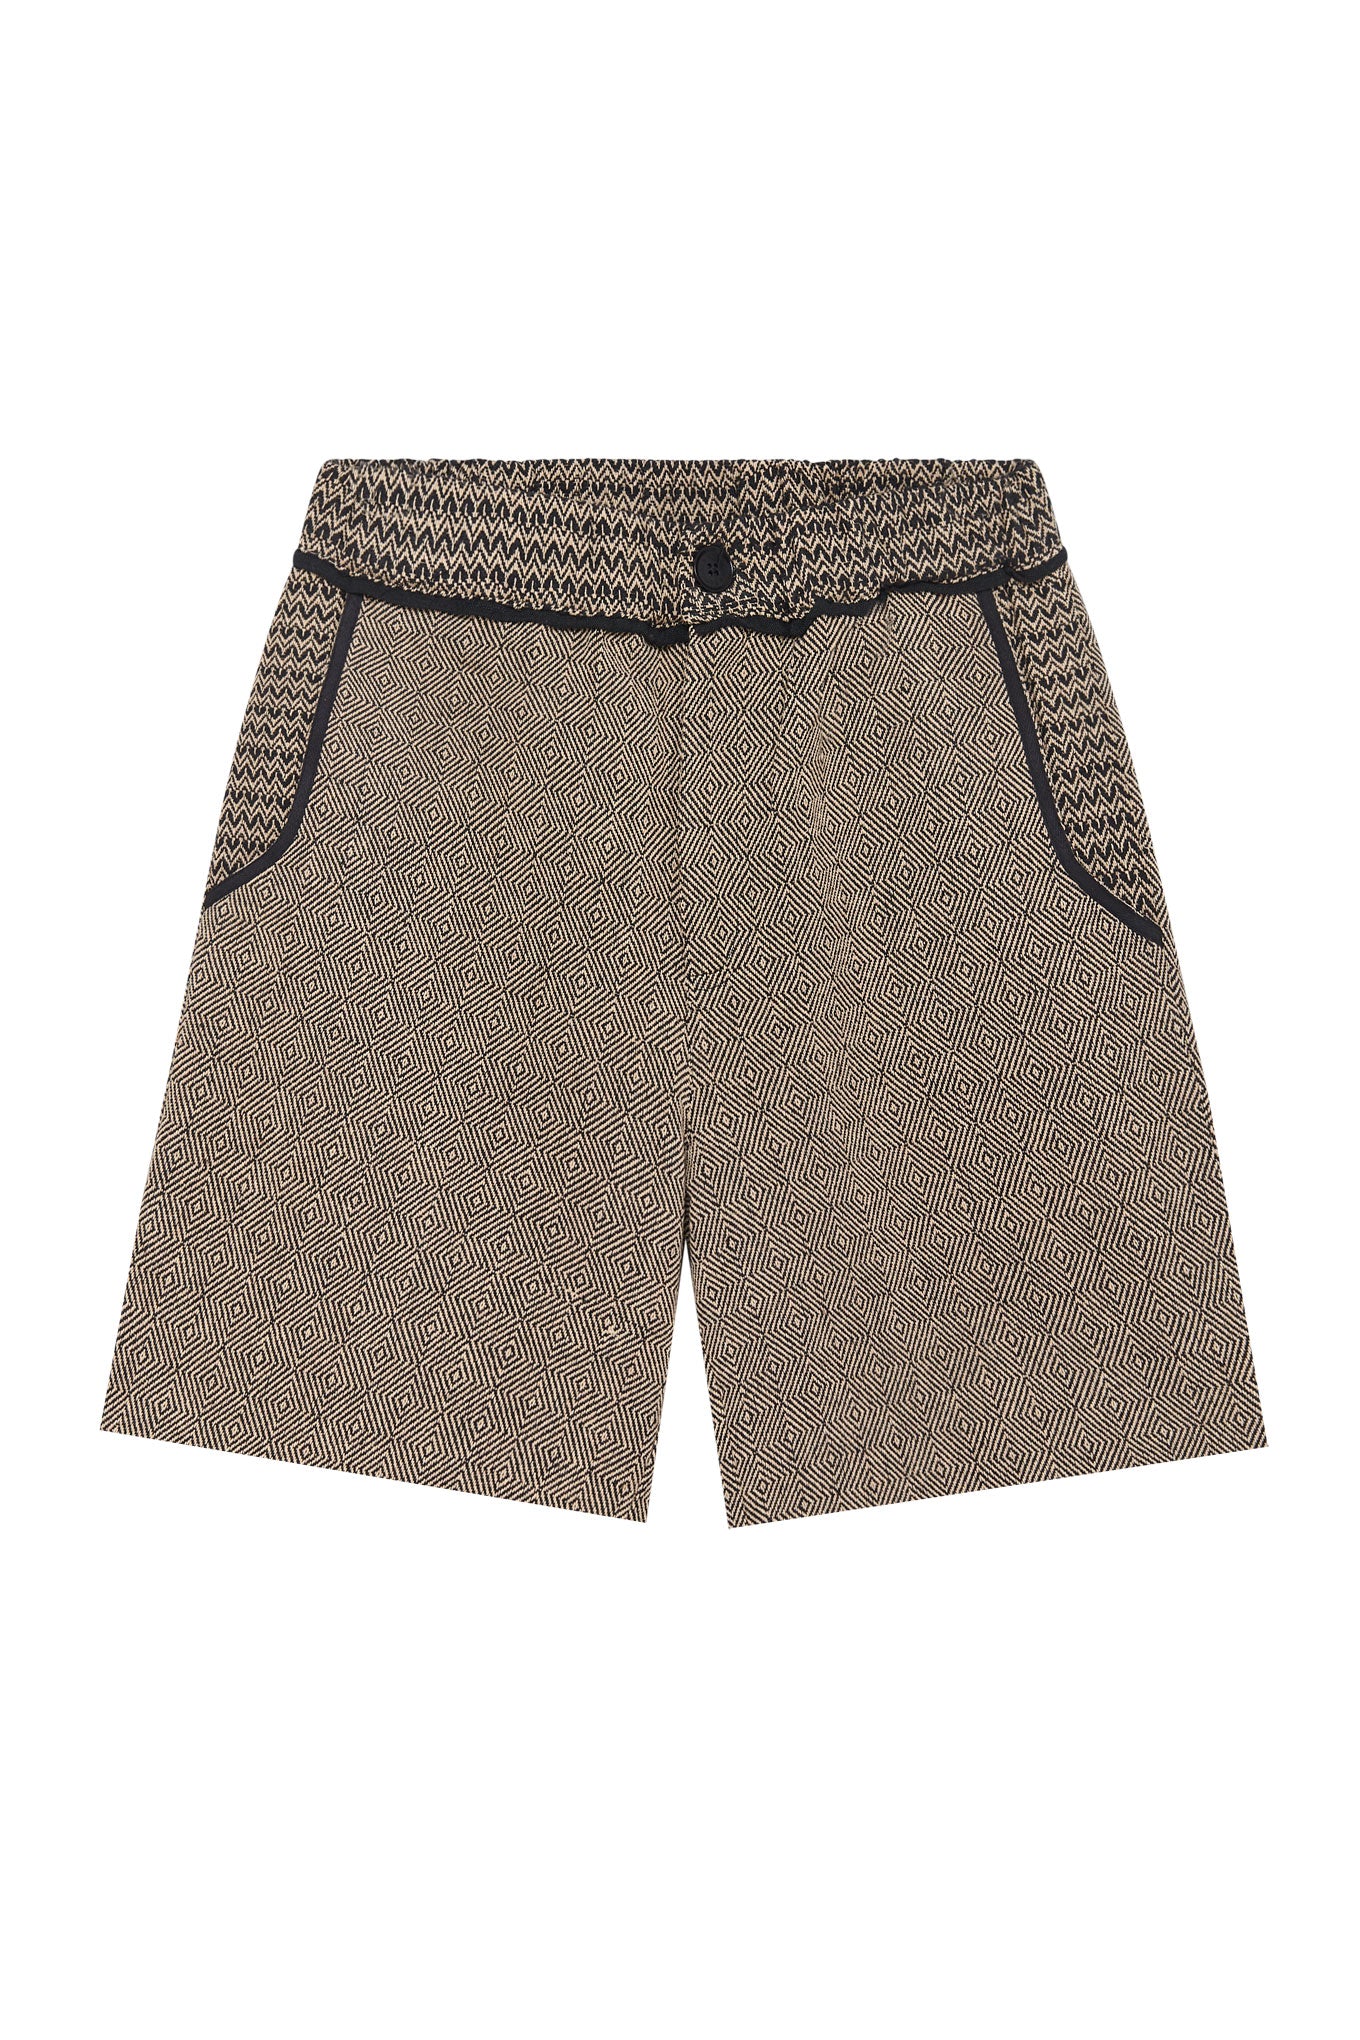 Komodo Men's Grey Joey - Hand Loomed Cotton Patchwork Shorts